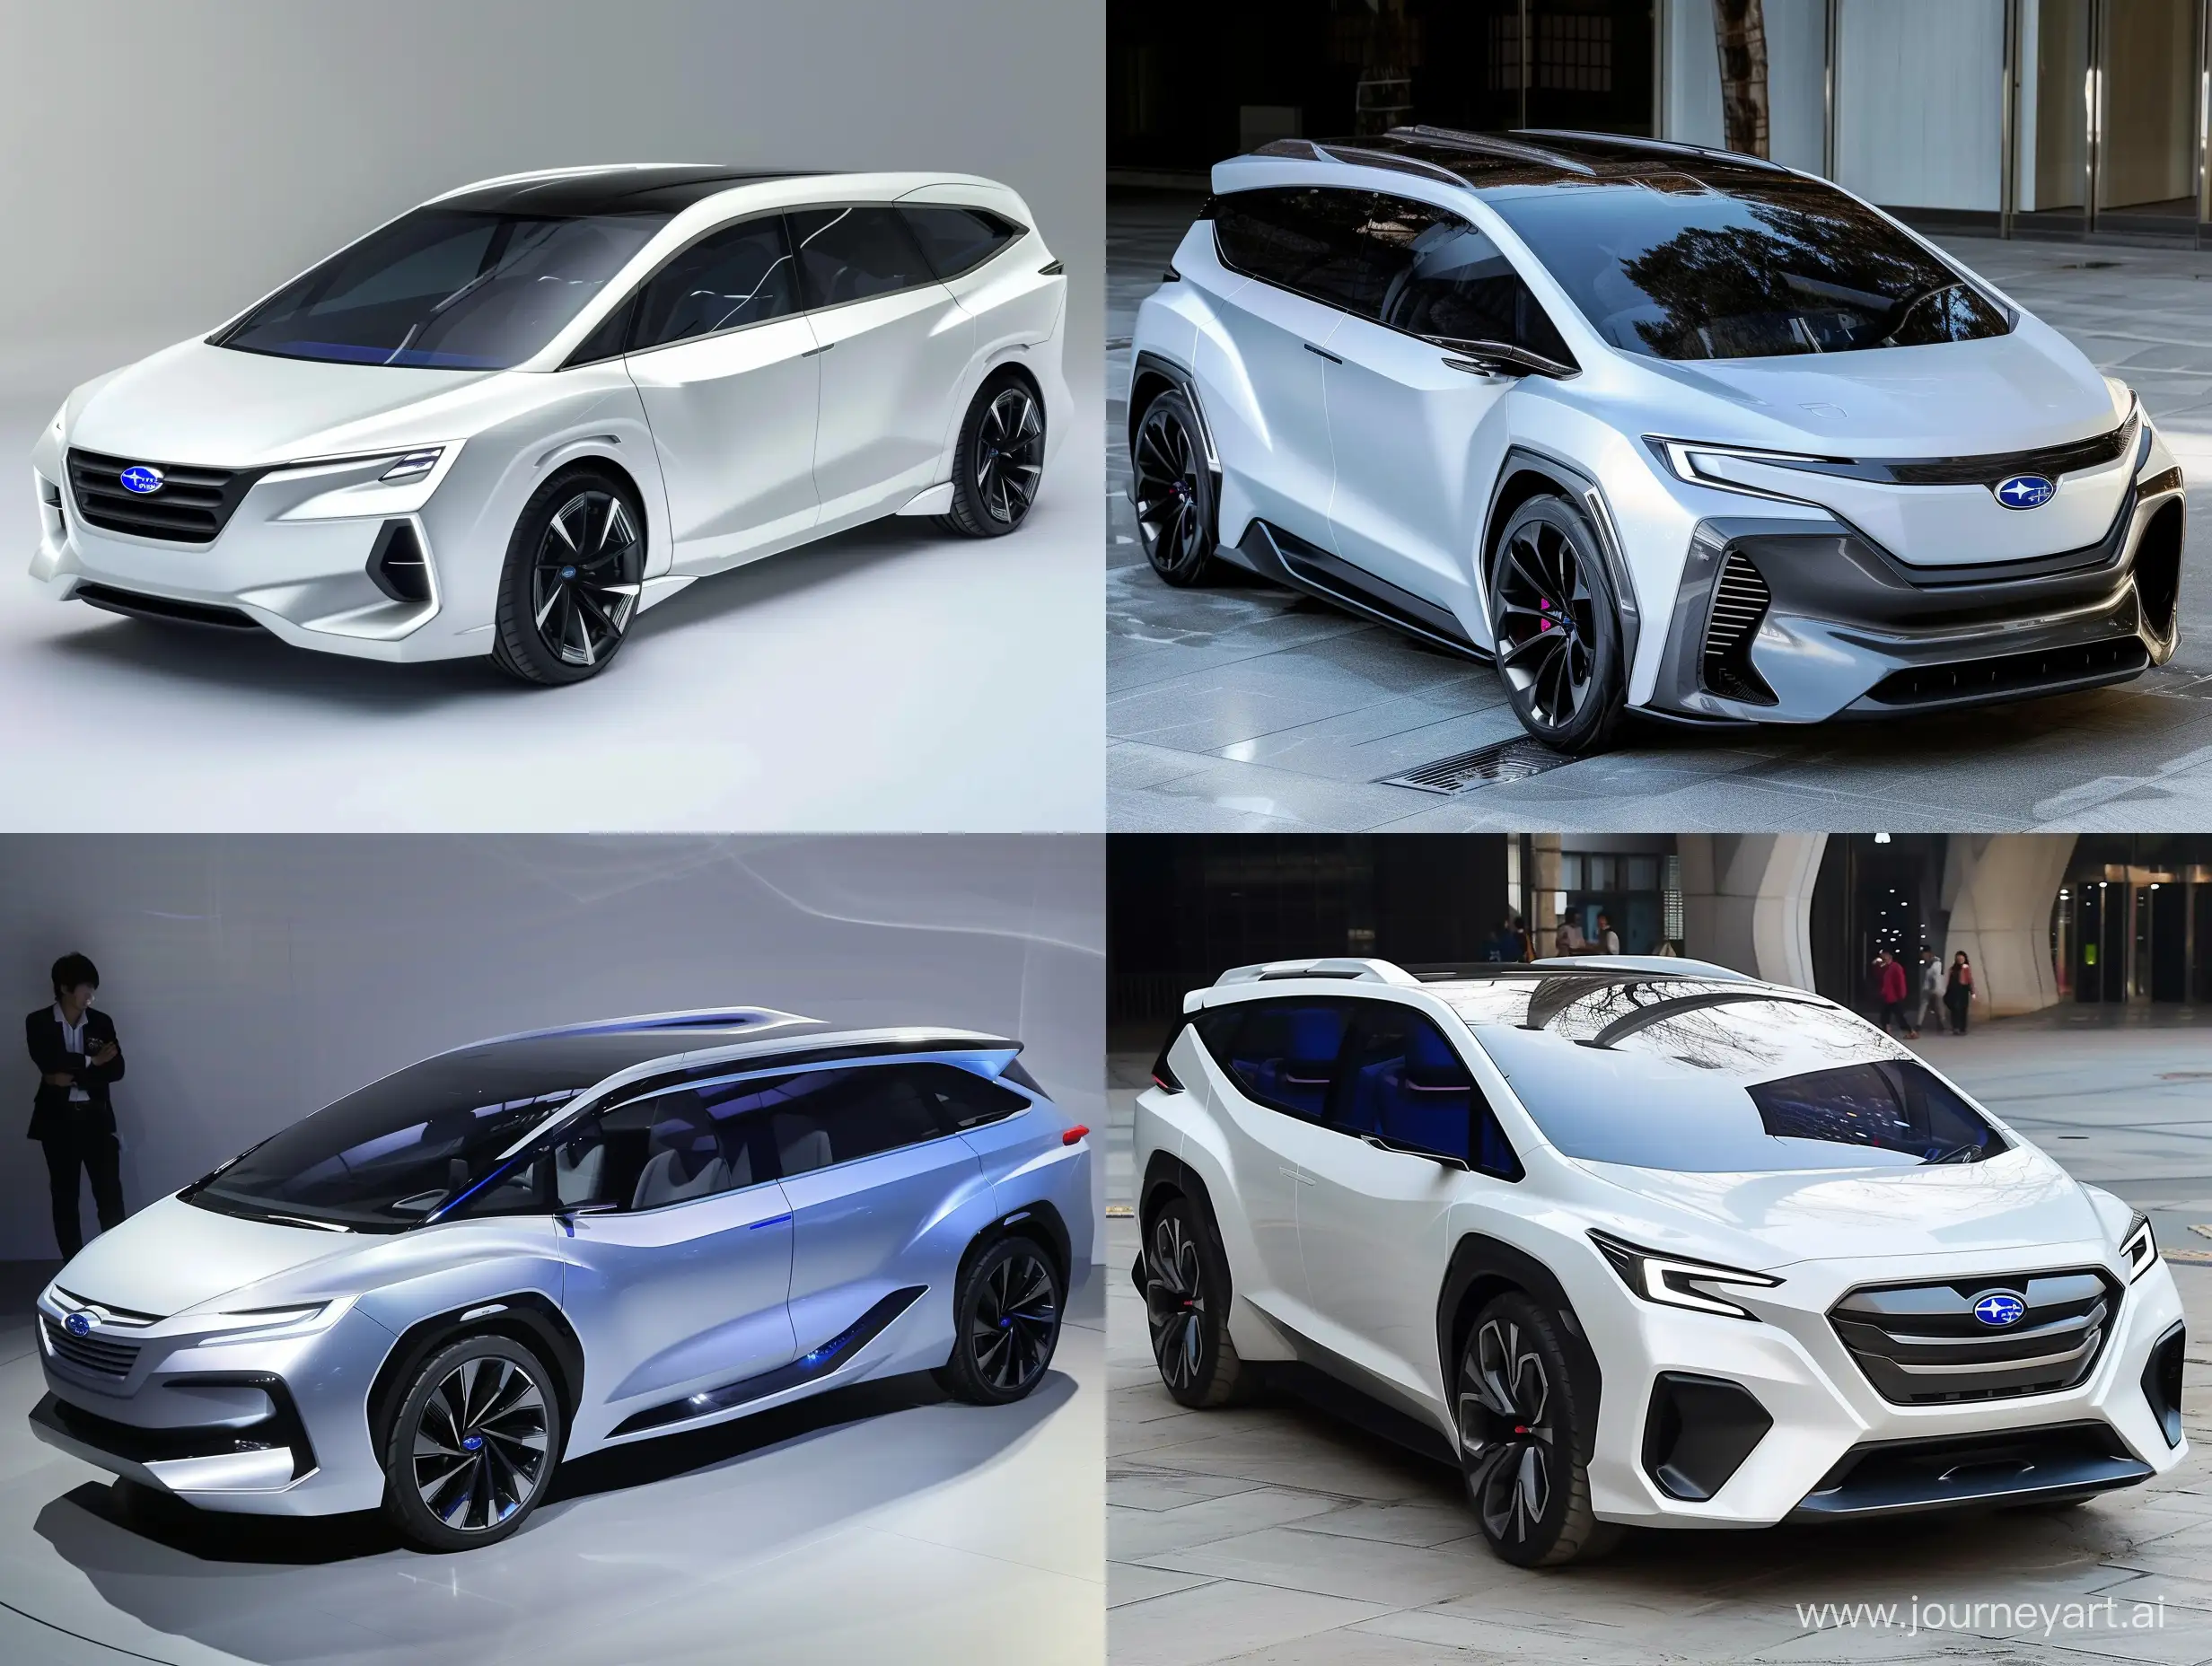 Futuristic-Subaru-Minivan-Based-on-Toyota-Noah-V6-Engine-Aspect-Ratio-43